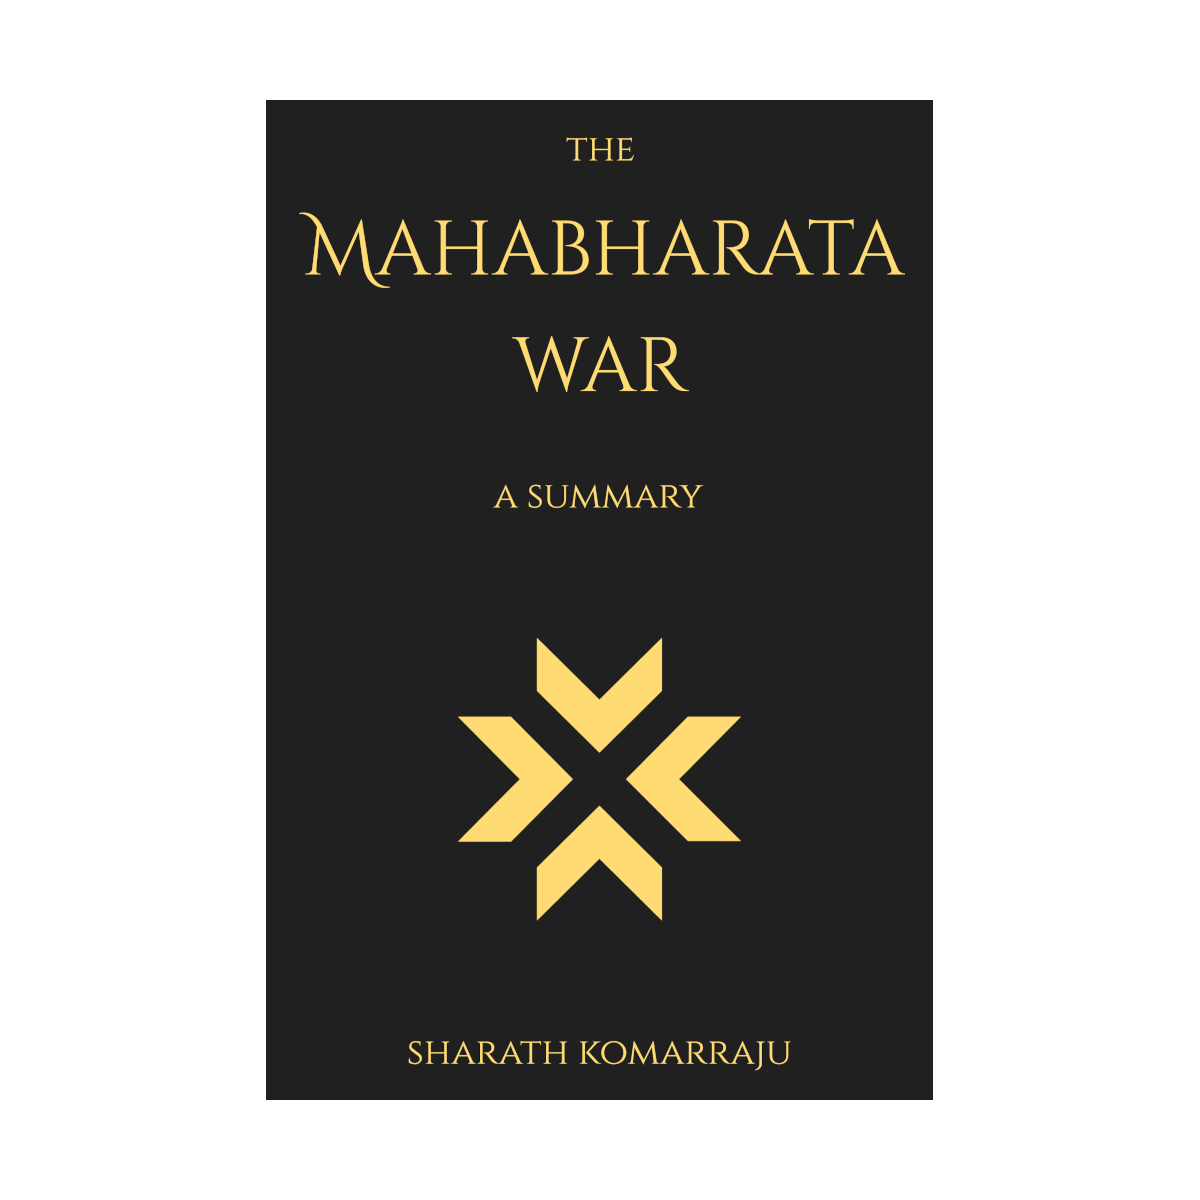 The Mahabharata War - A Summary